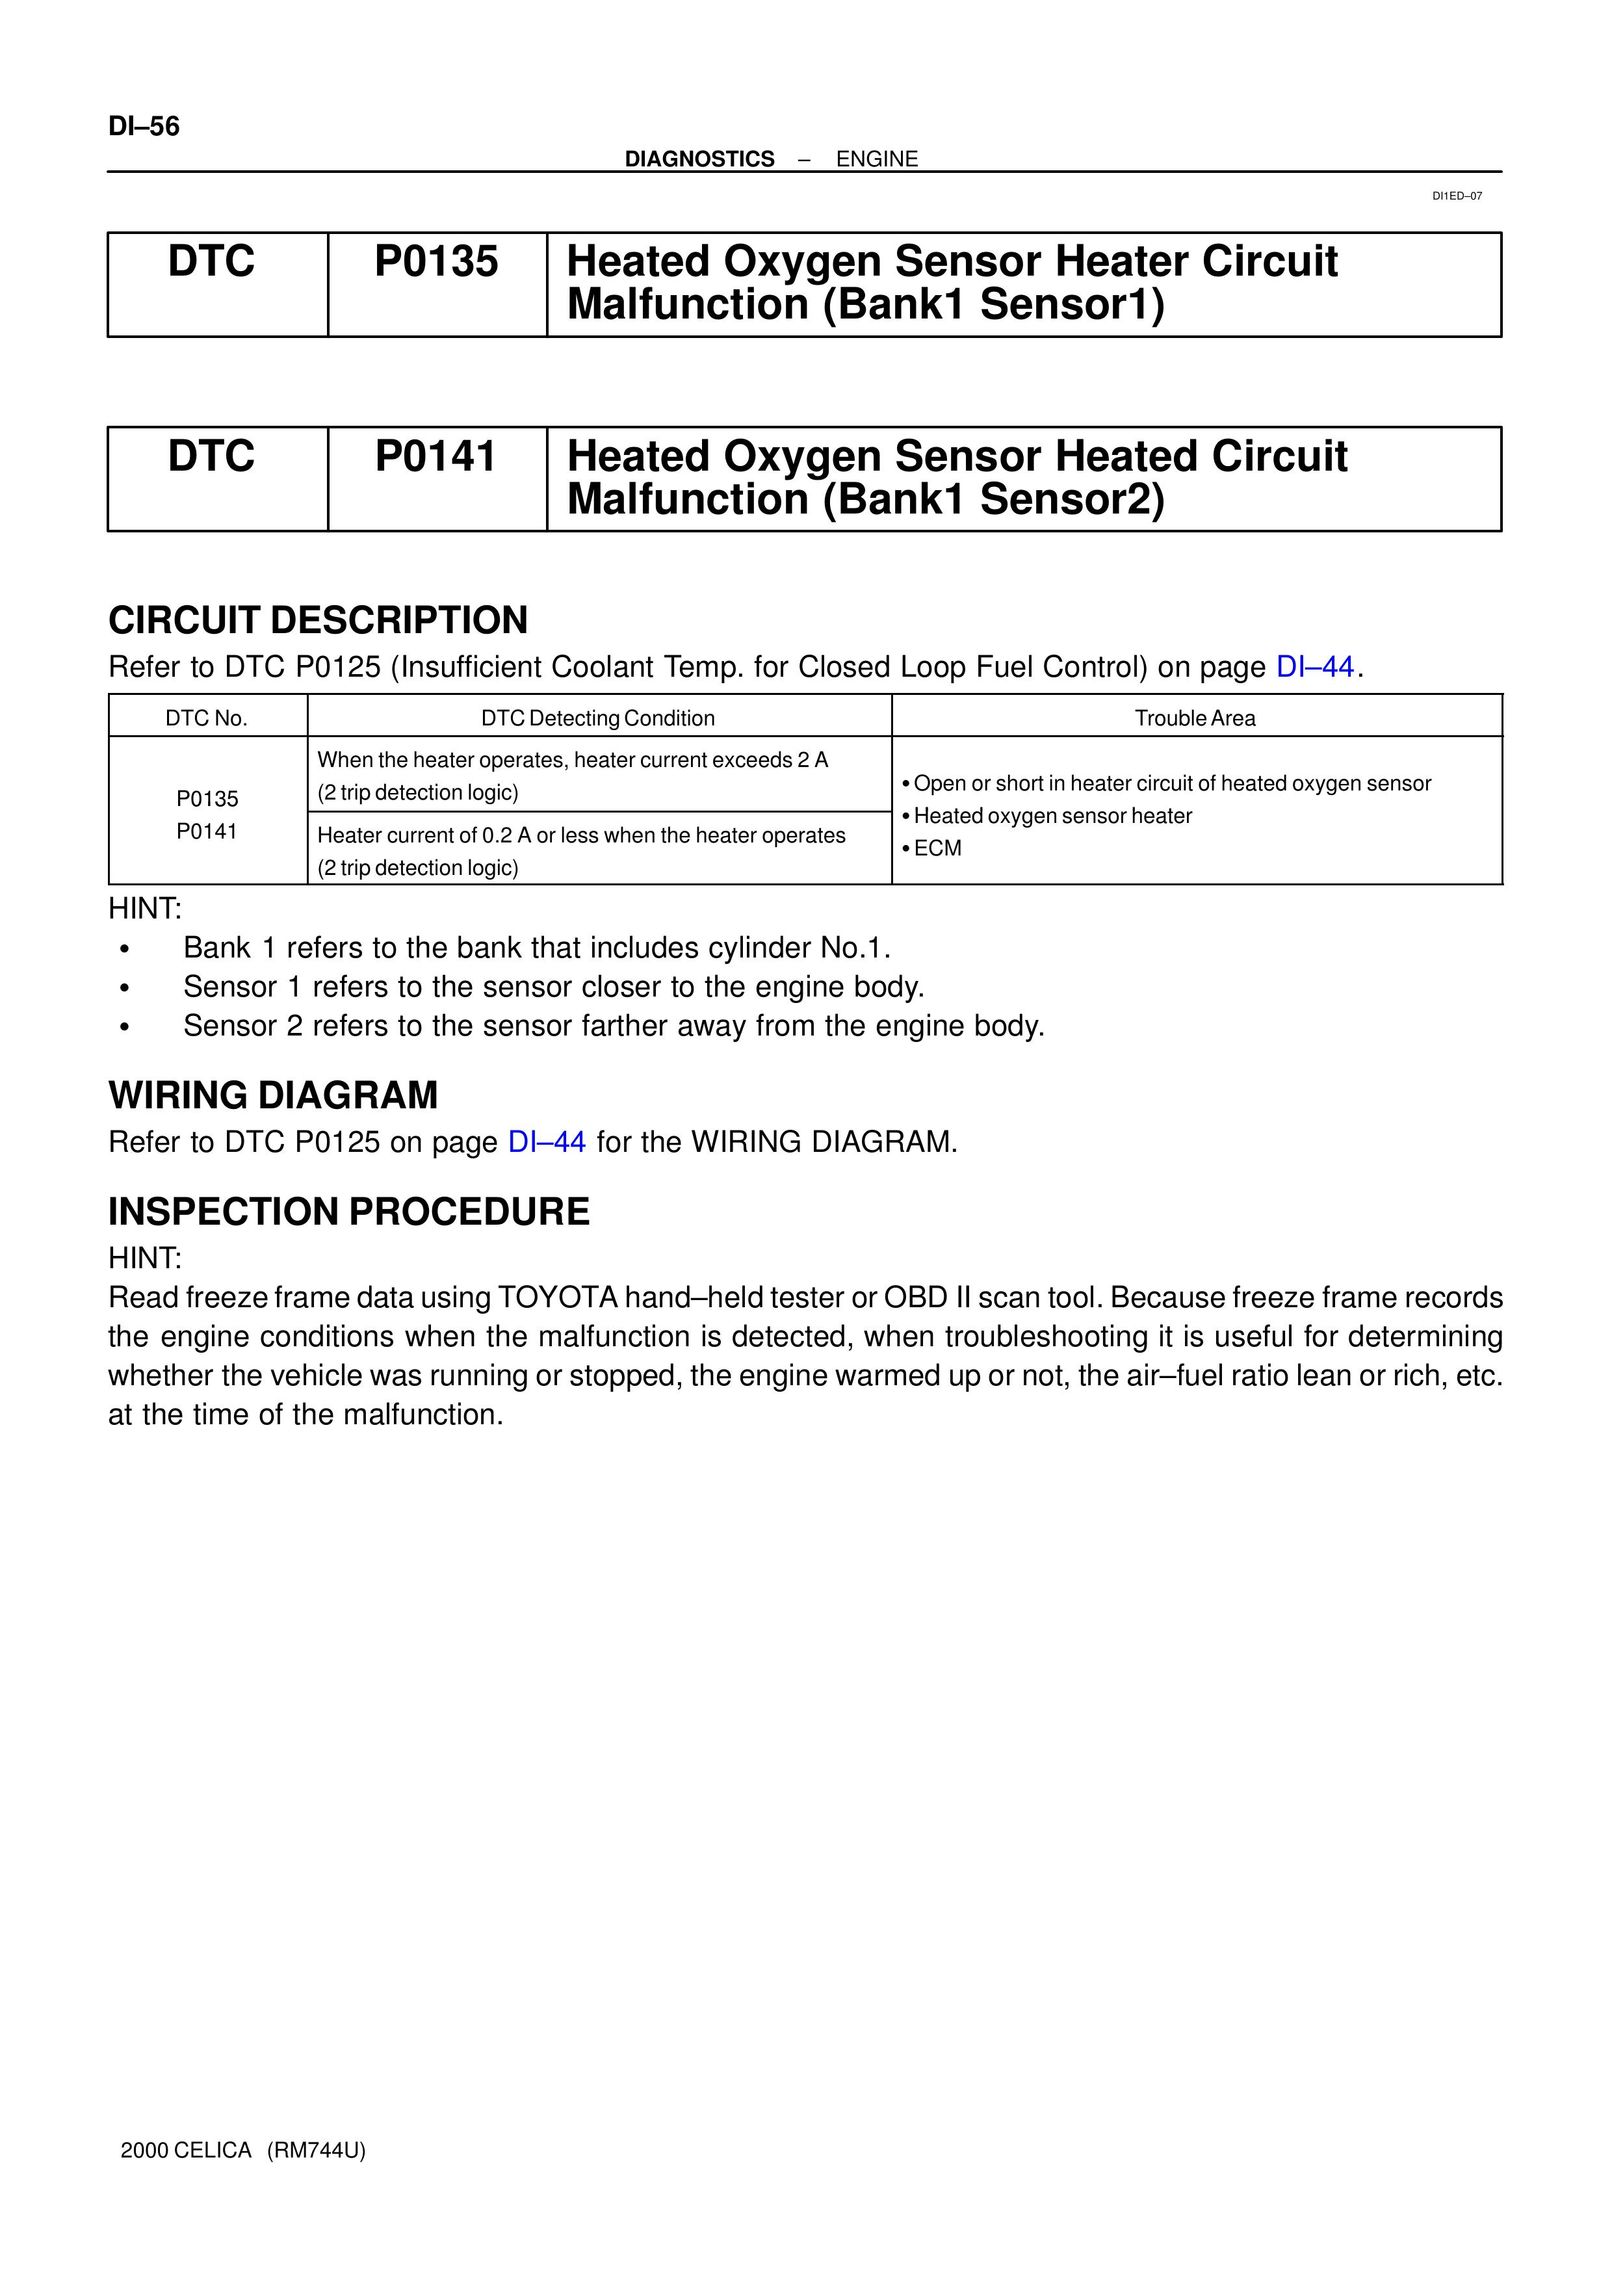 Toyota DTC P0135 Stove User Manual